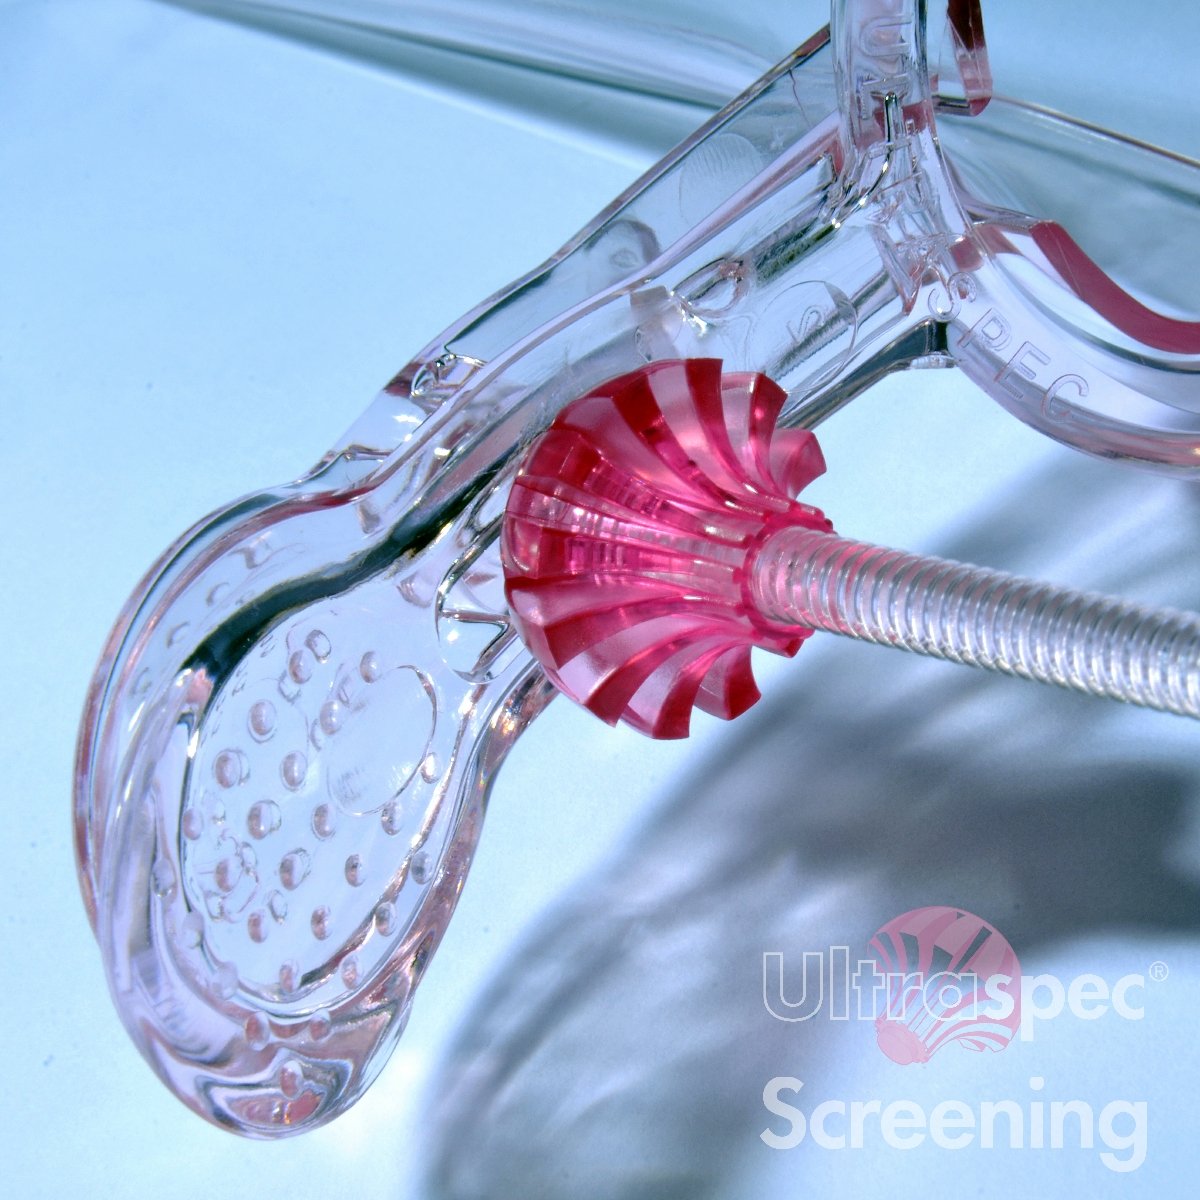 Ultraspec® Screening Speculum Splice Cast